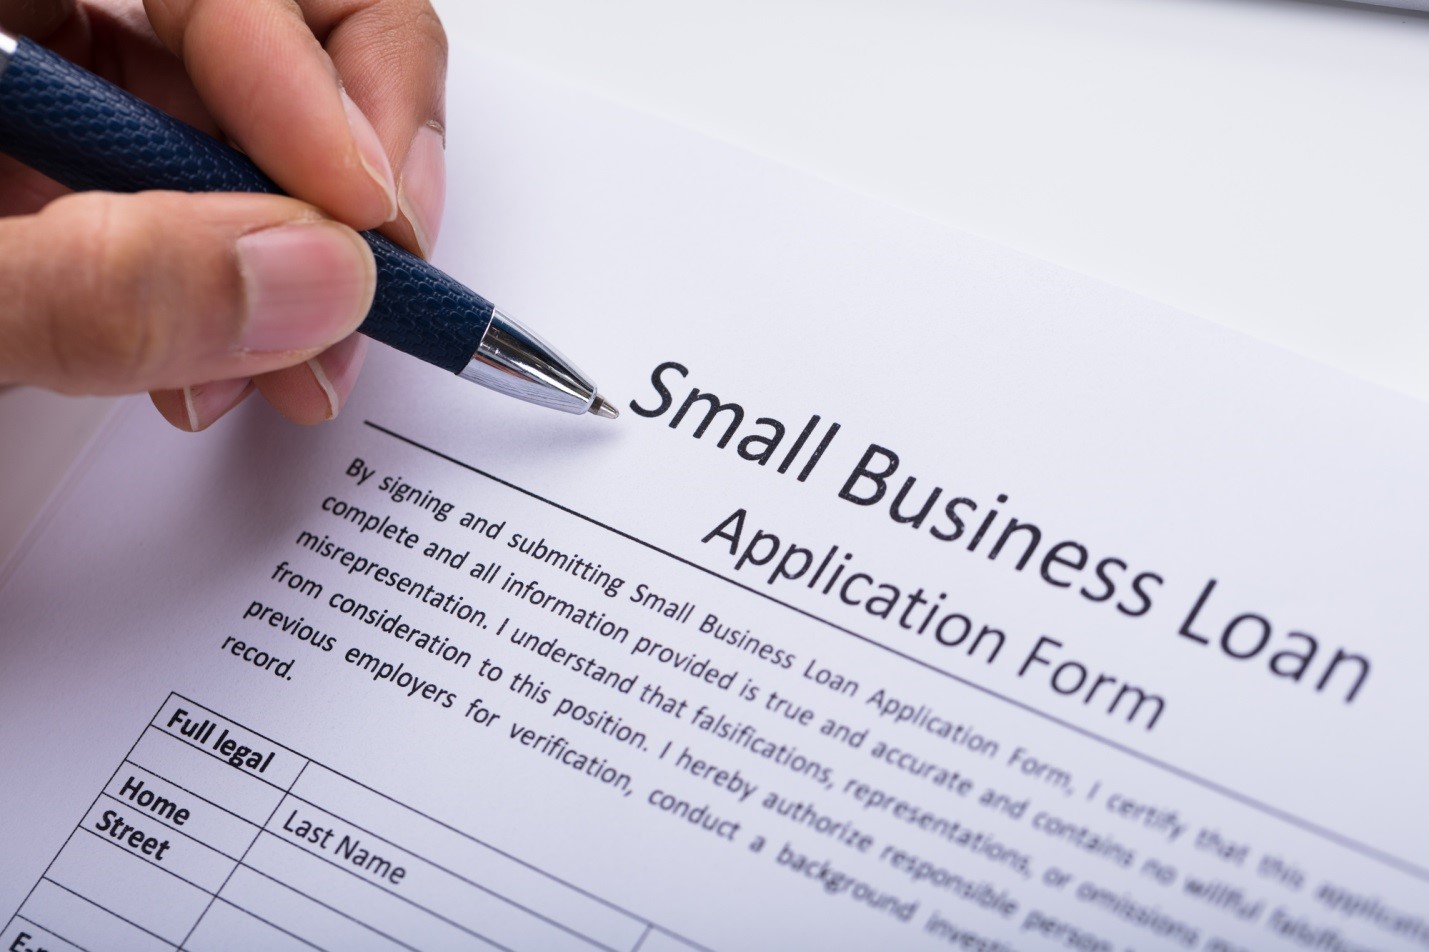 small-business-loan